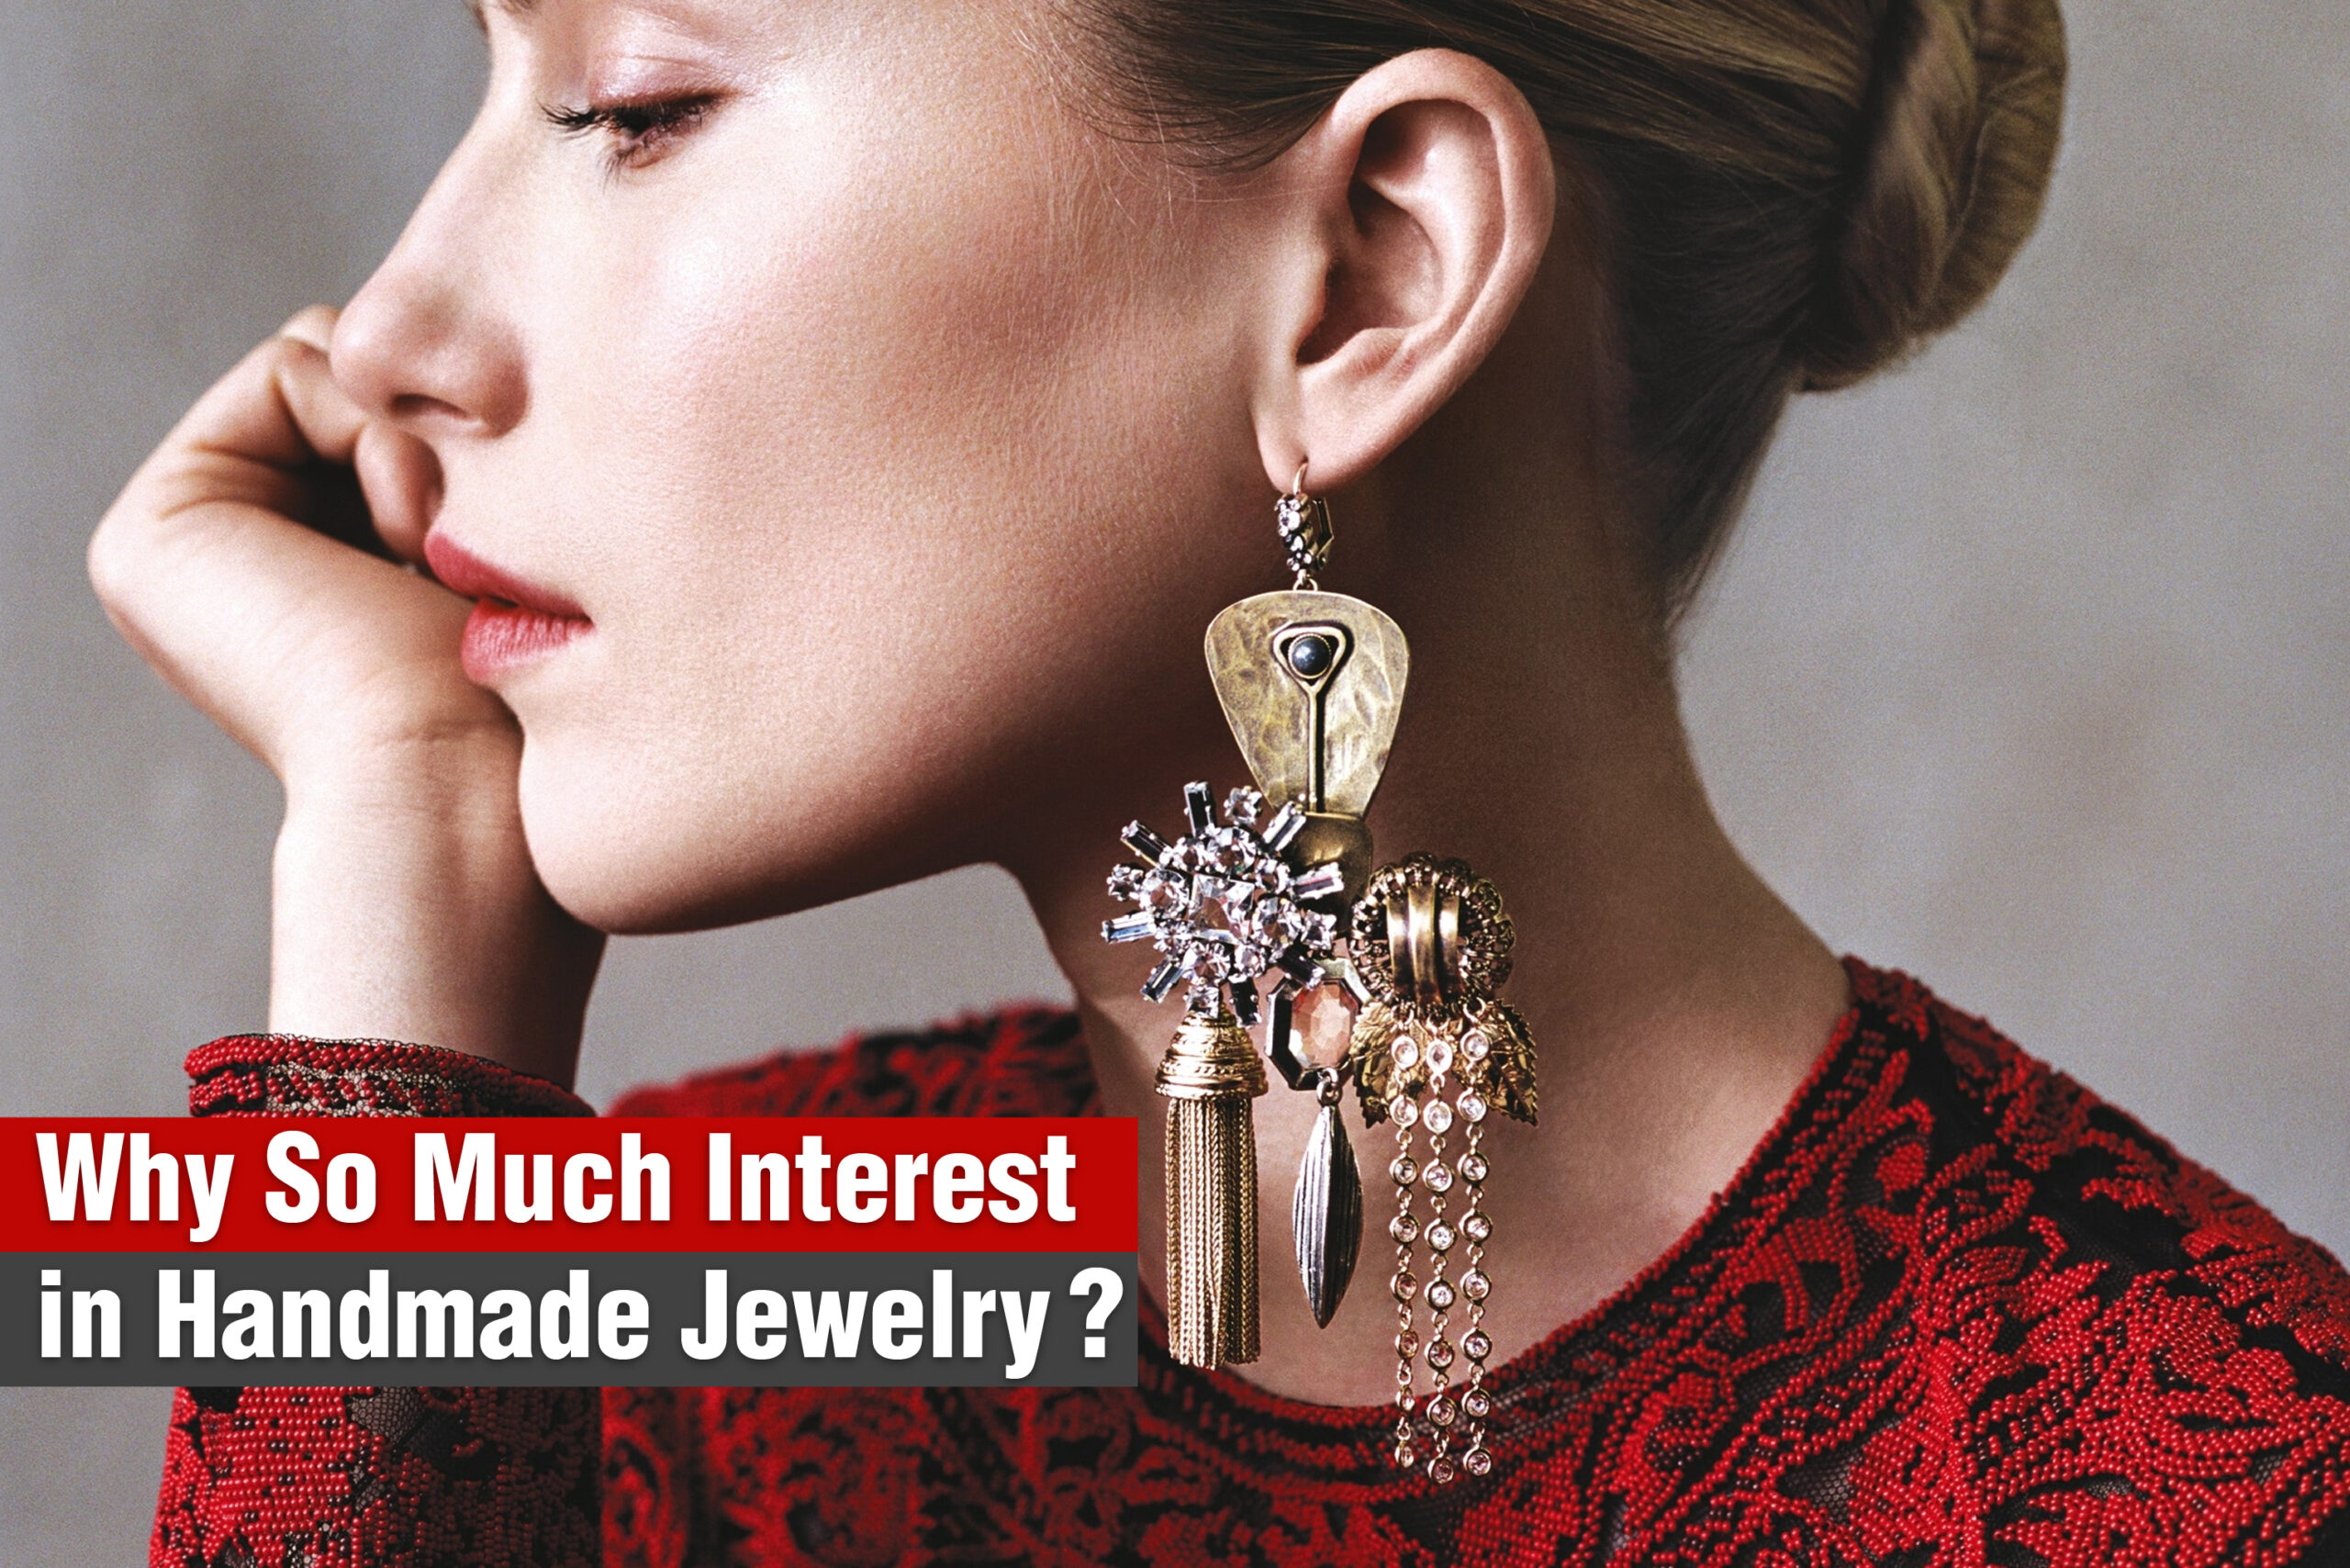 The value of handmade jewelry